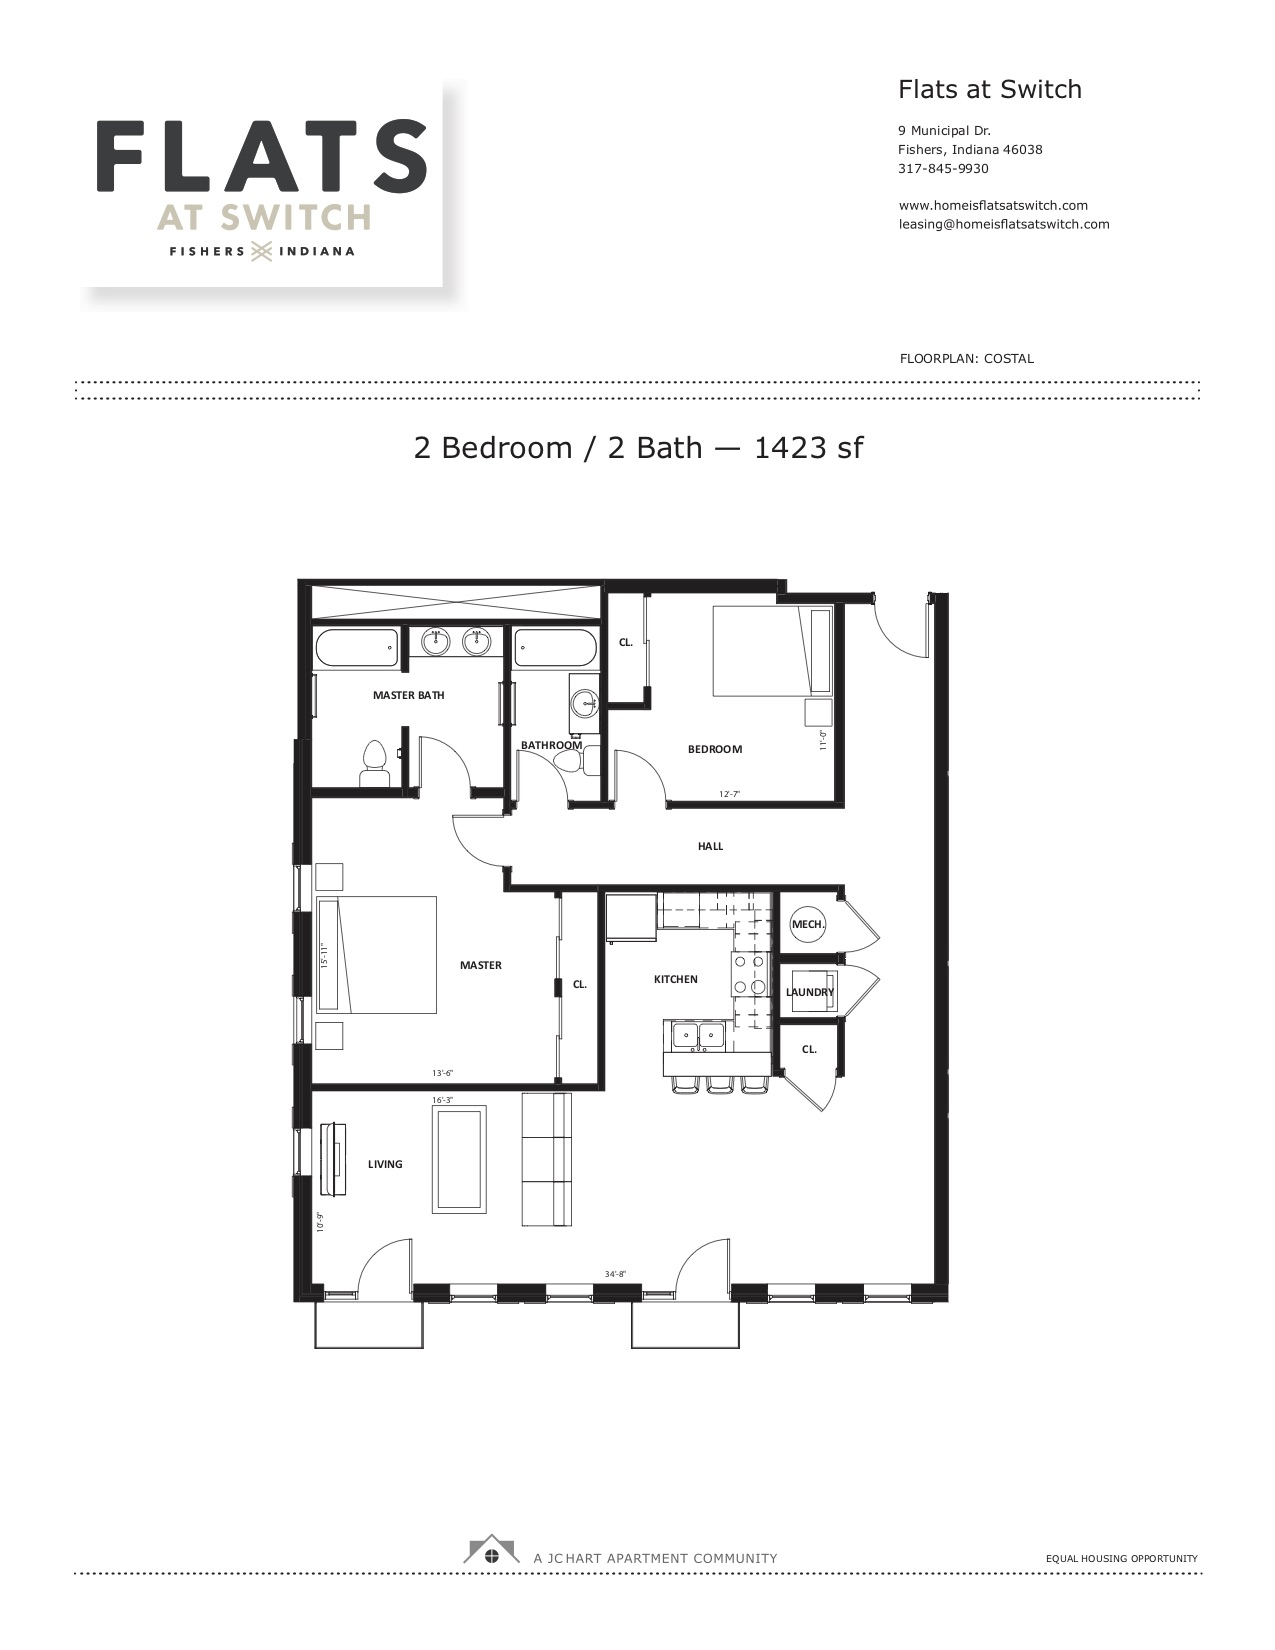 Costal floor plan.jpg